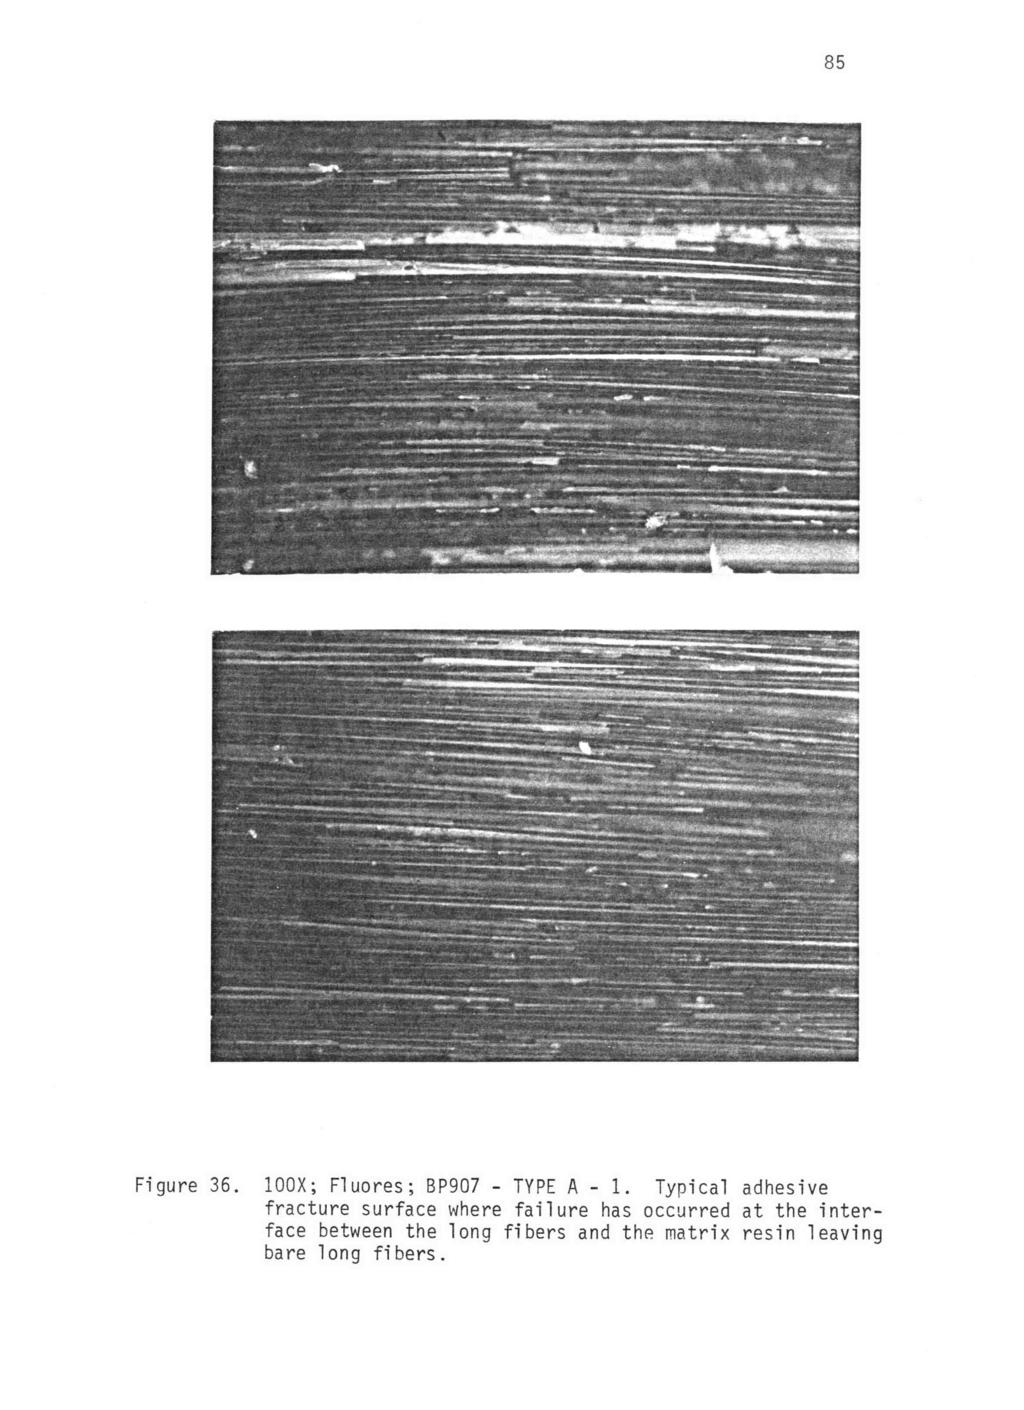 Figure 36. 100X; Fluores; BP907 - TYPE A 1.